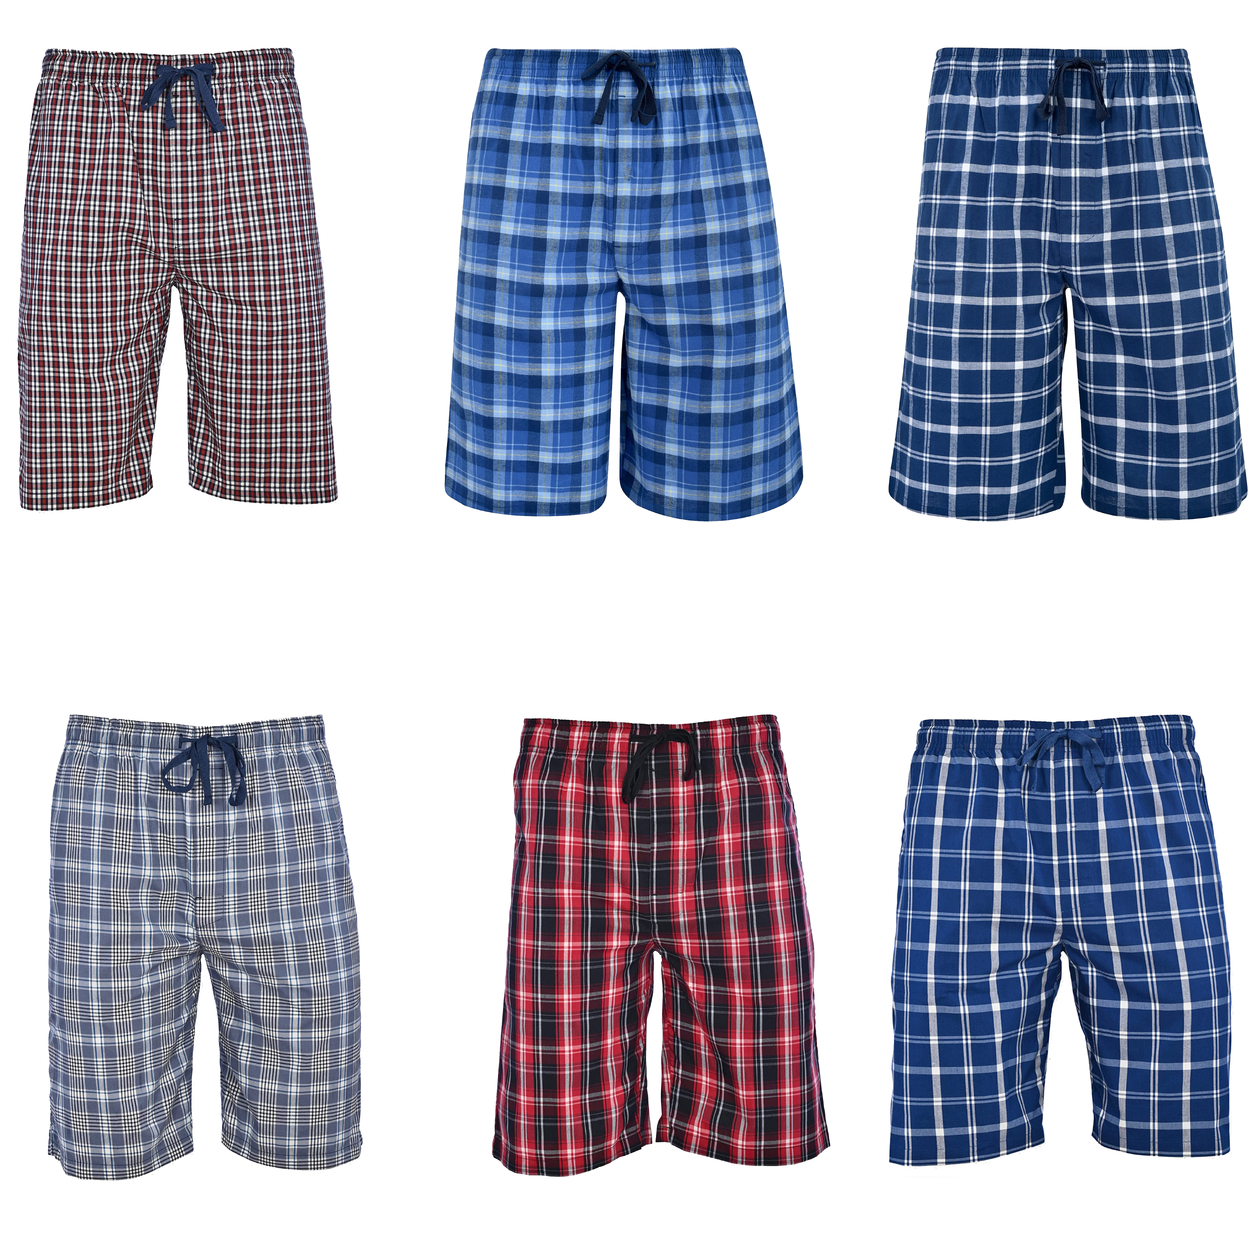 2-Pack: Men's Ultra Soft Plaid Lounge Pajama Sleep Wear Shorts - Black & Red, X-large